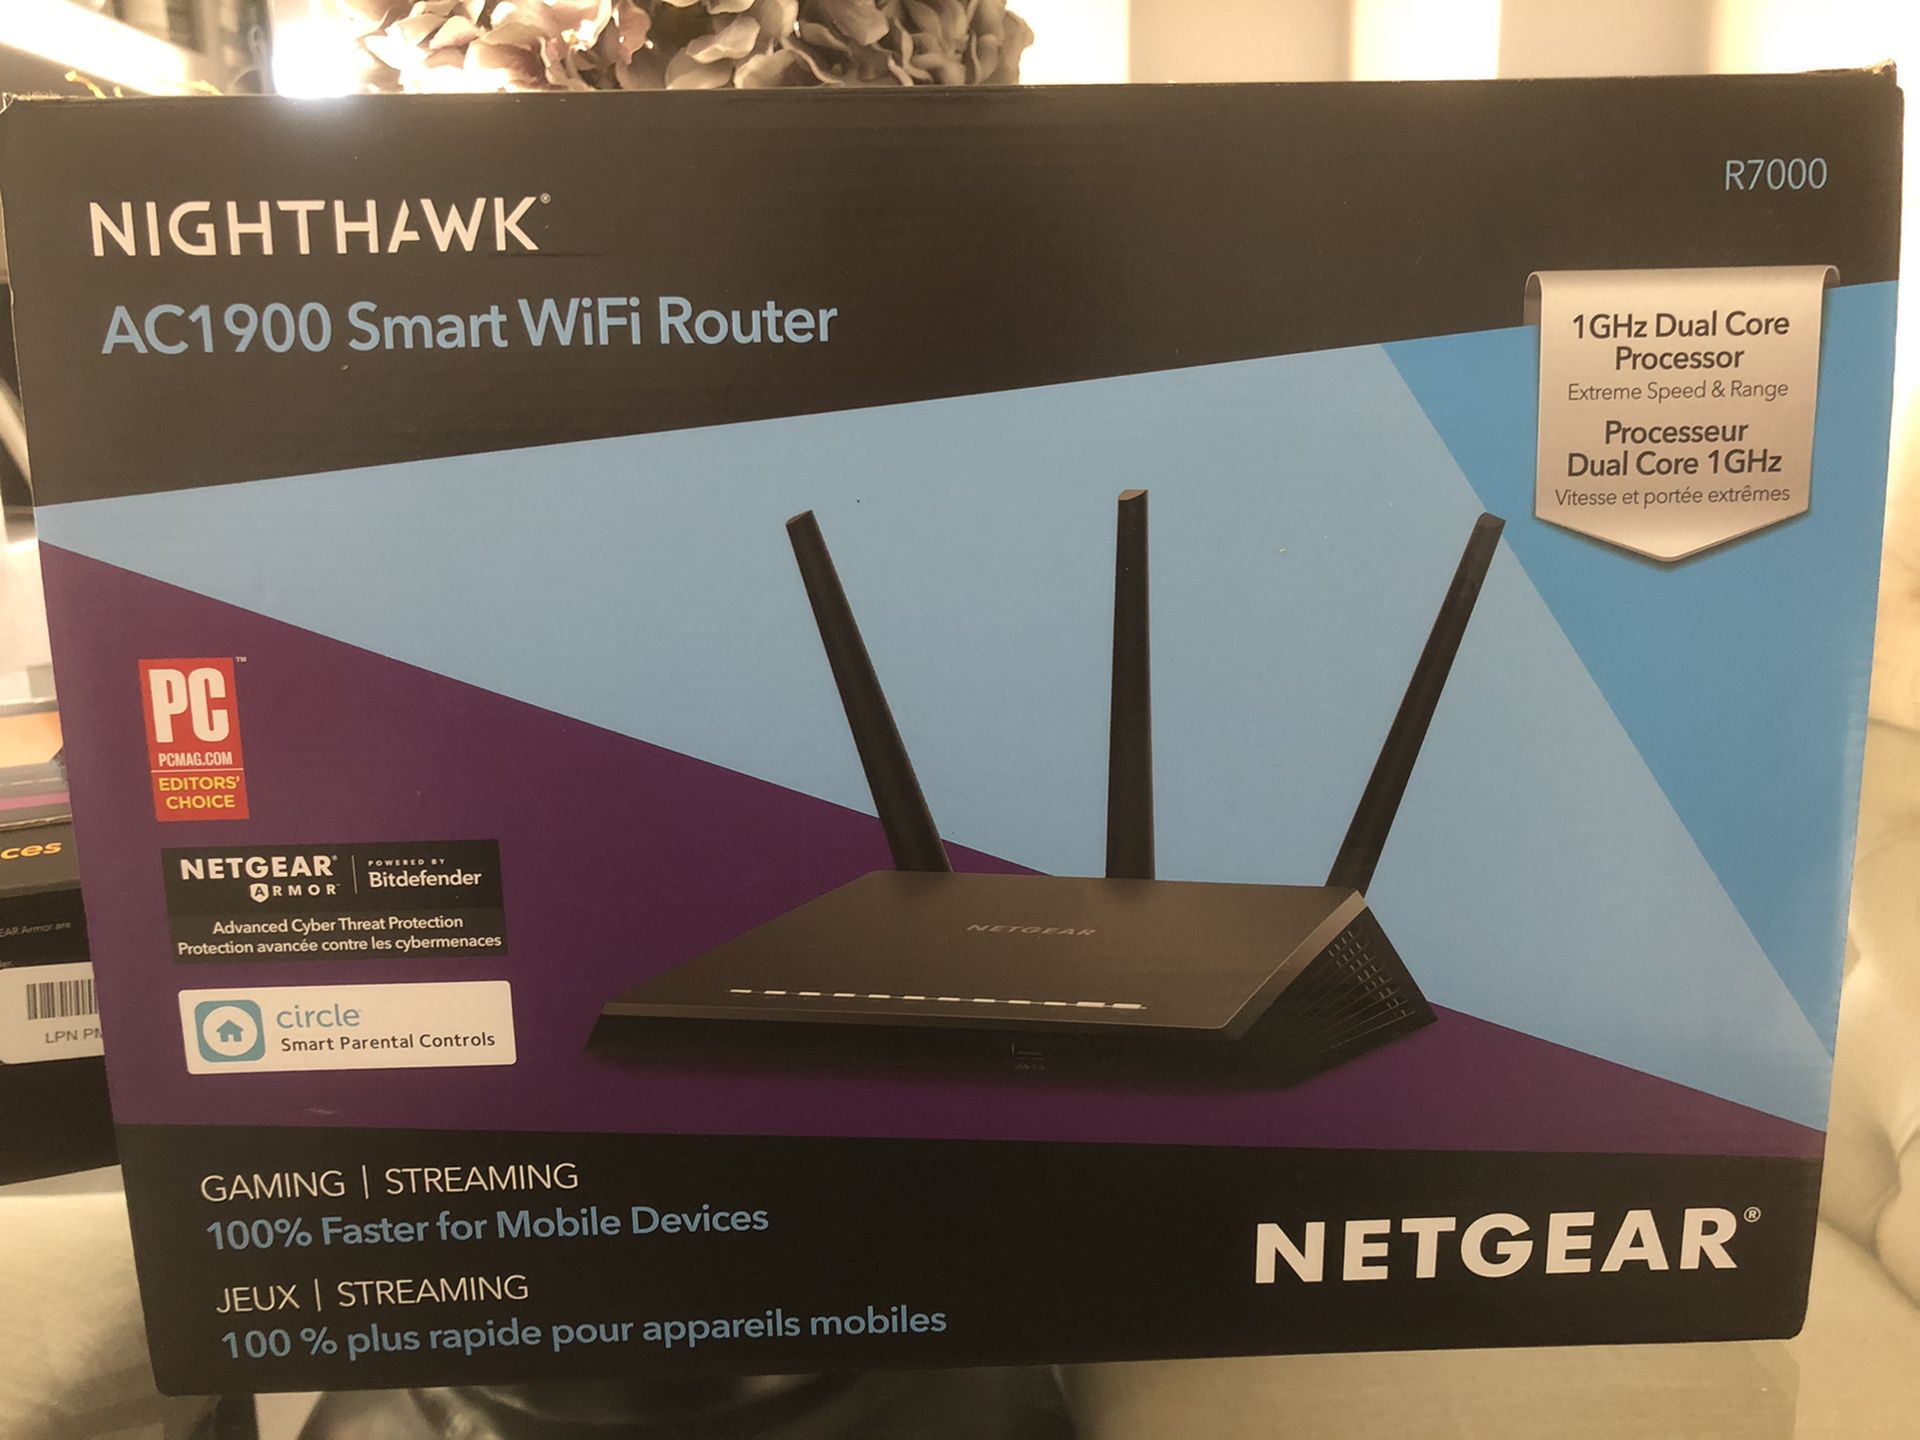 Netgear AC1900 smart WiFi router